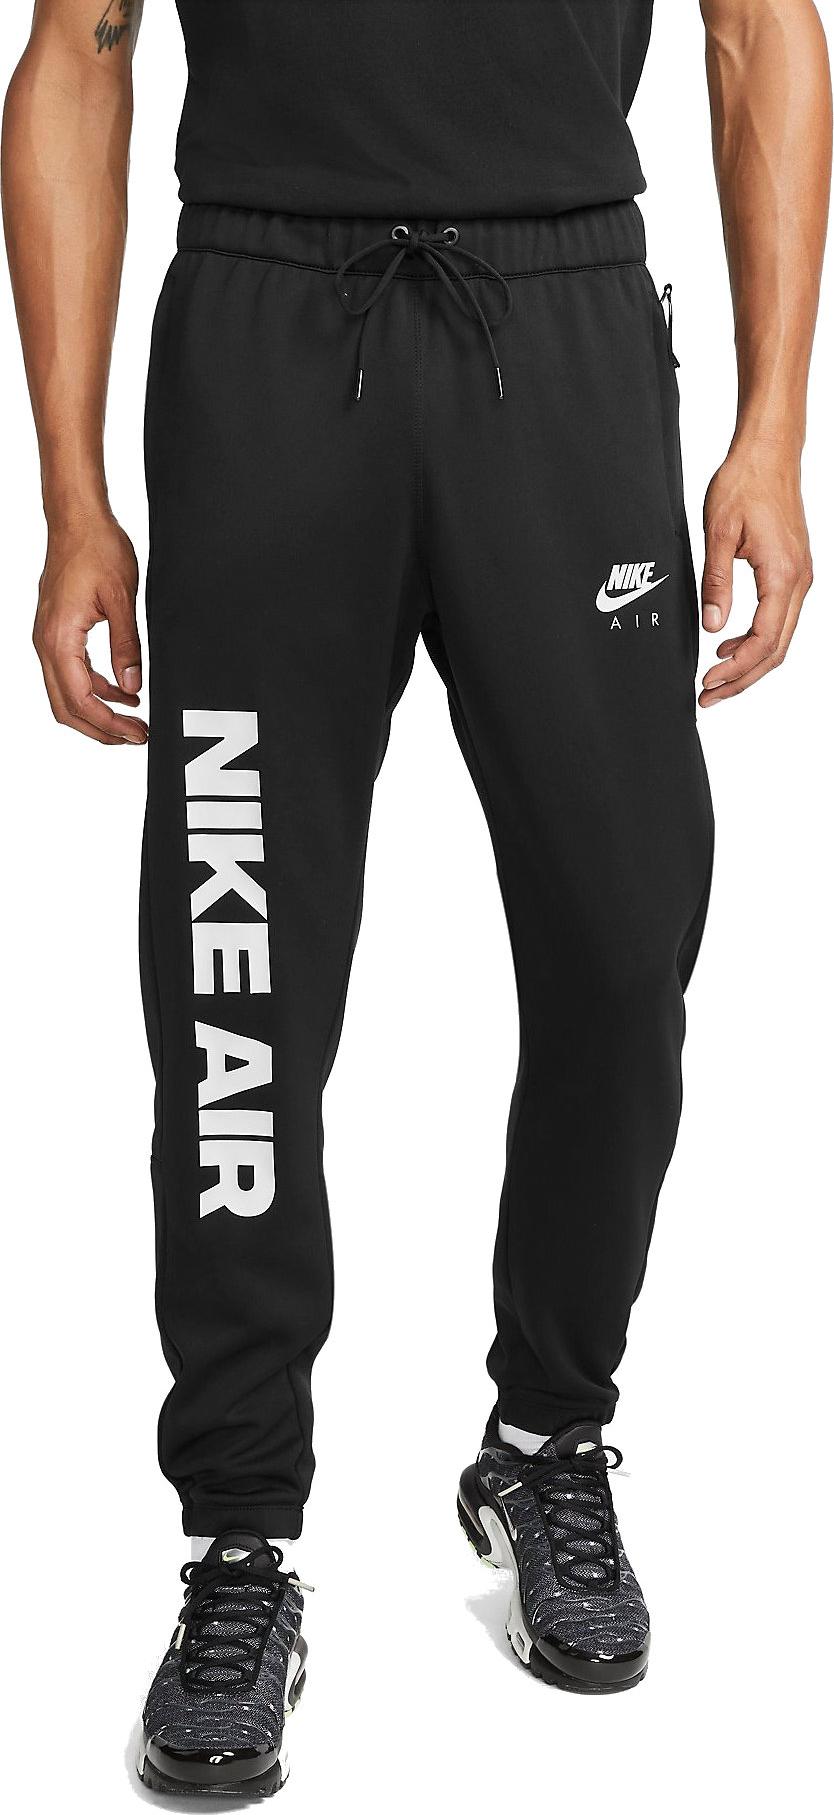 Pantalon Nike Air Black - DM5211-010 - pantalones - TheSneakerOne